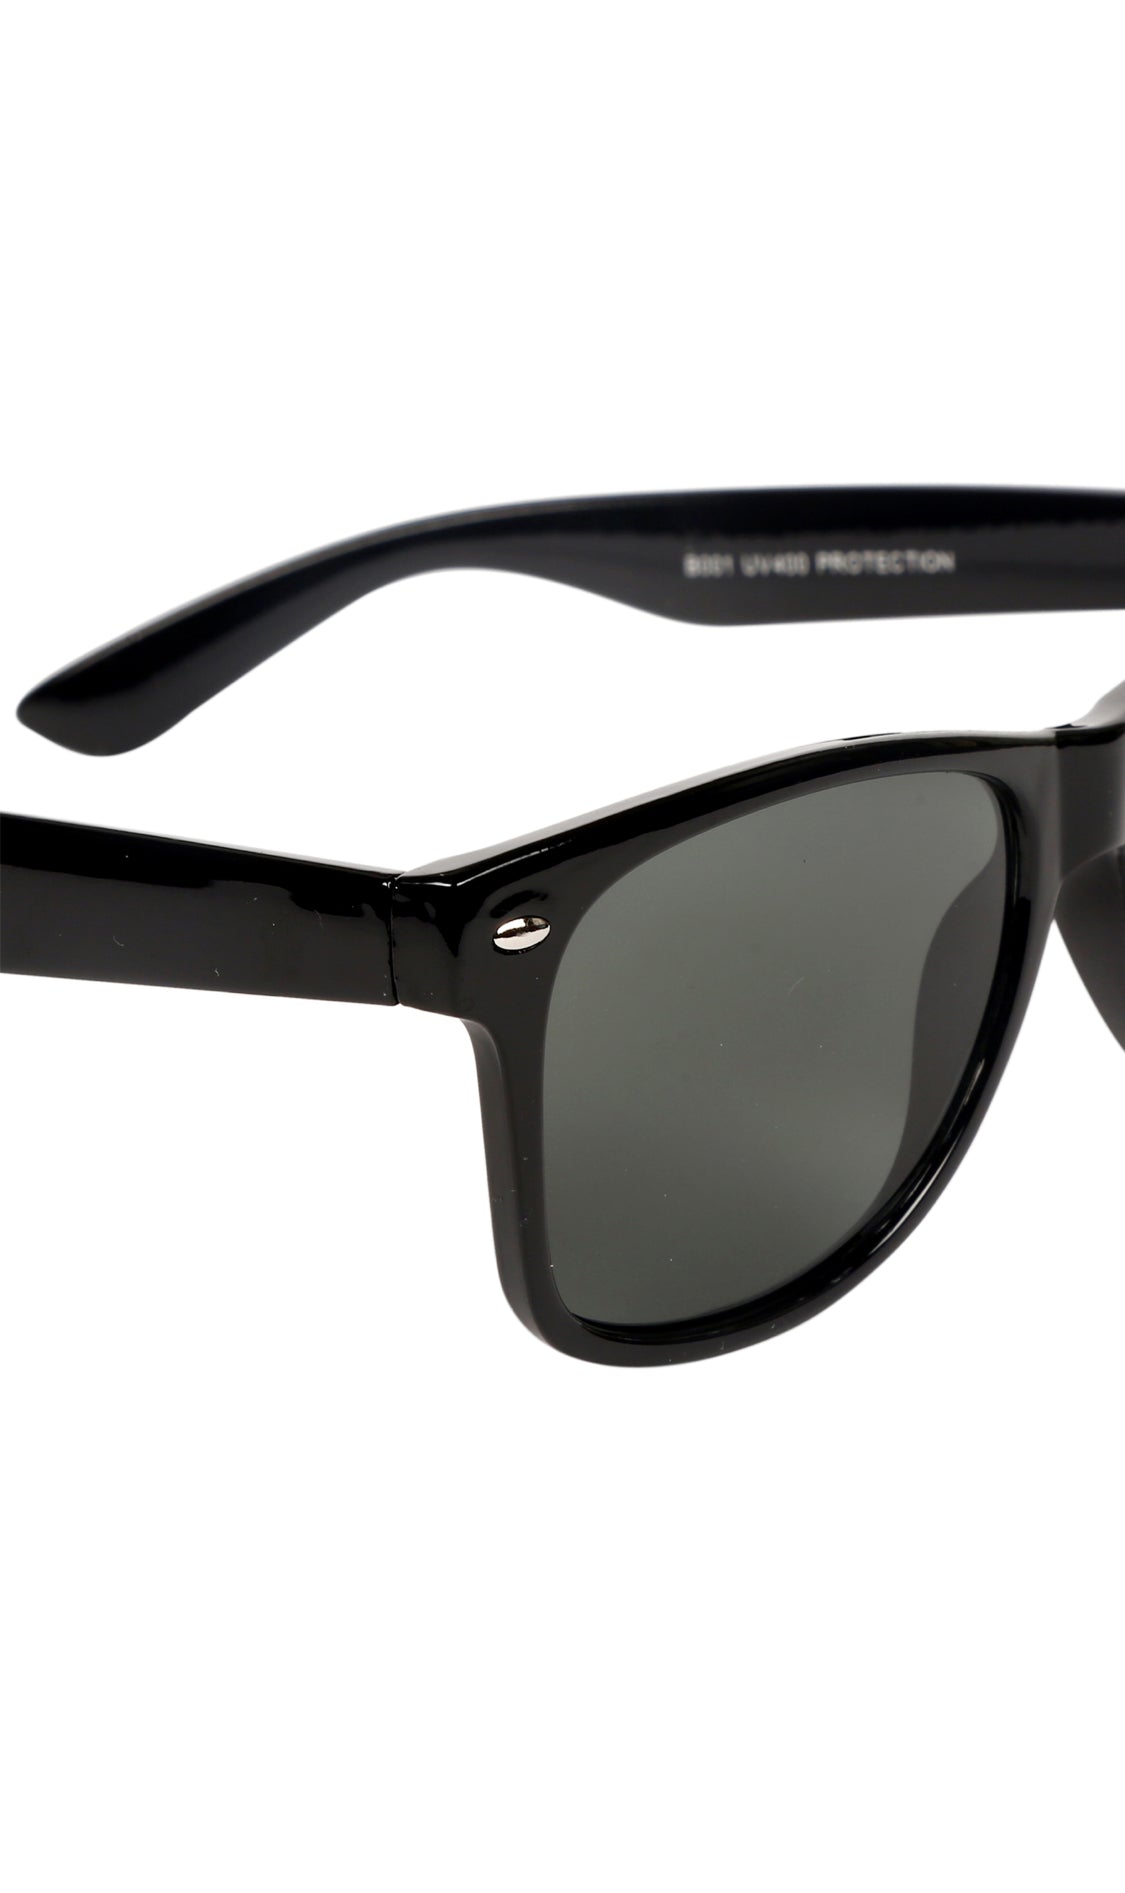 Jodykoes® Stylish Looking Fashionable UV Protection Sunglasses Wayfare Shape Eyeshades For Men and Women (Grey) - Jodykoes ®